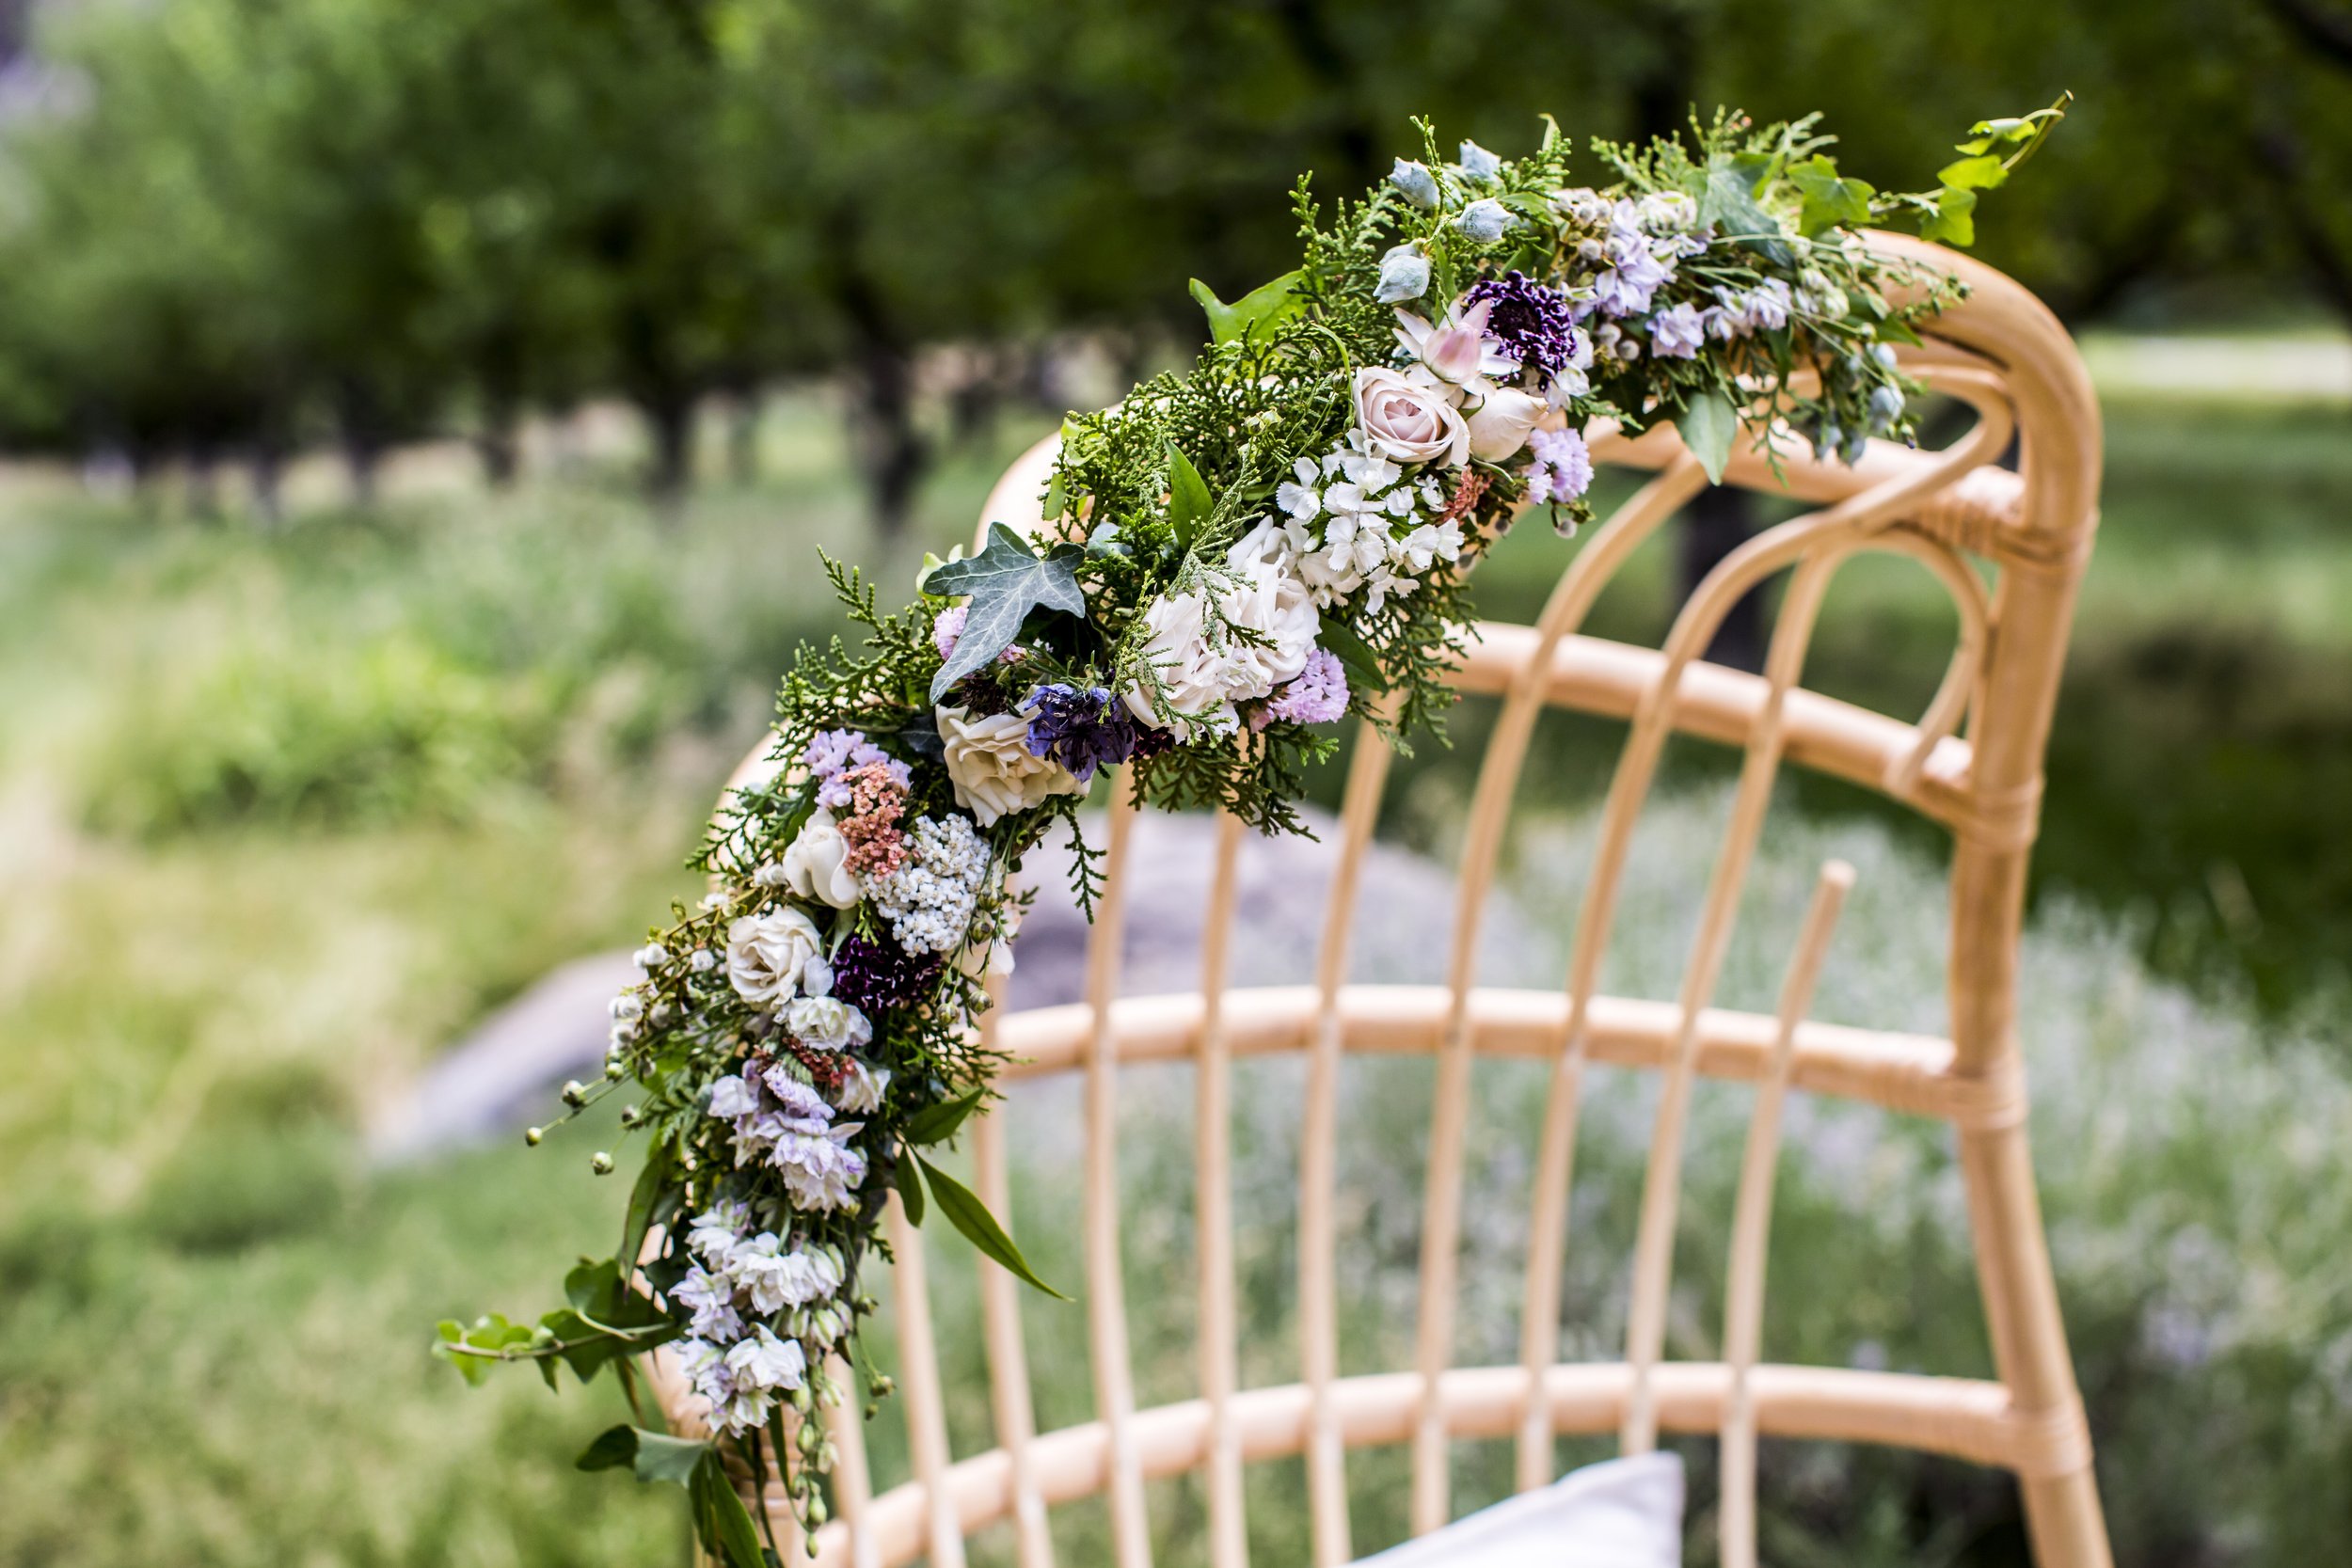 Romantic summer solstice orchard wedding chair decor